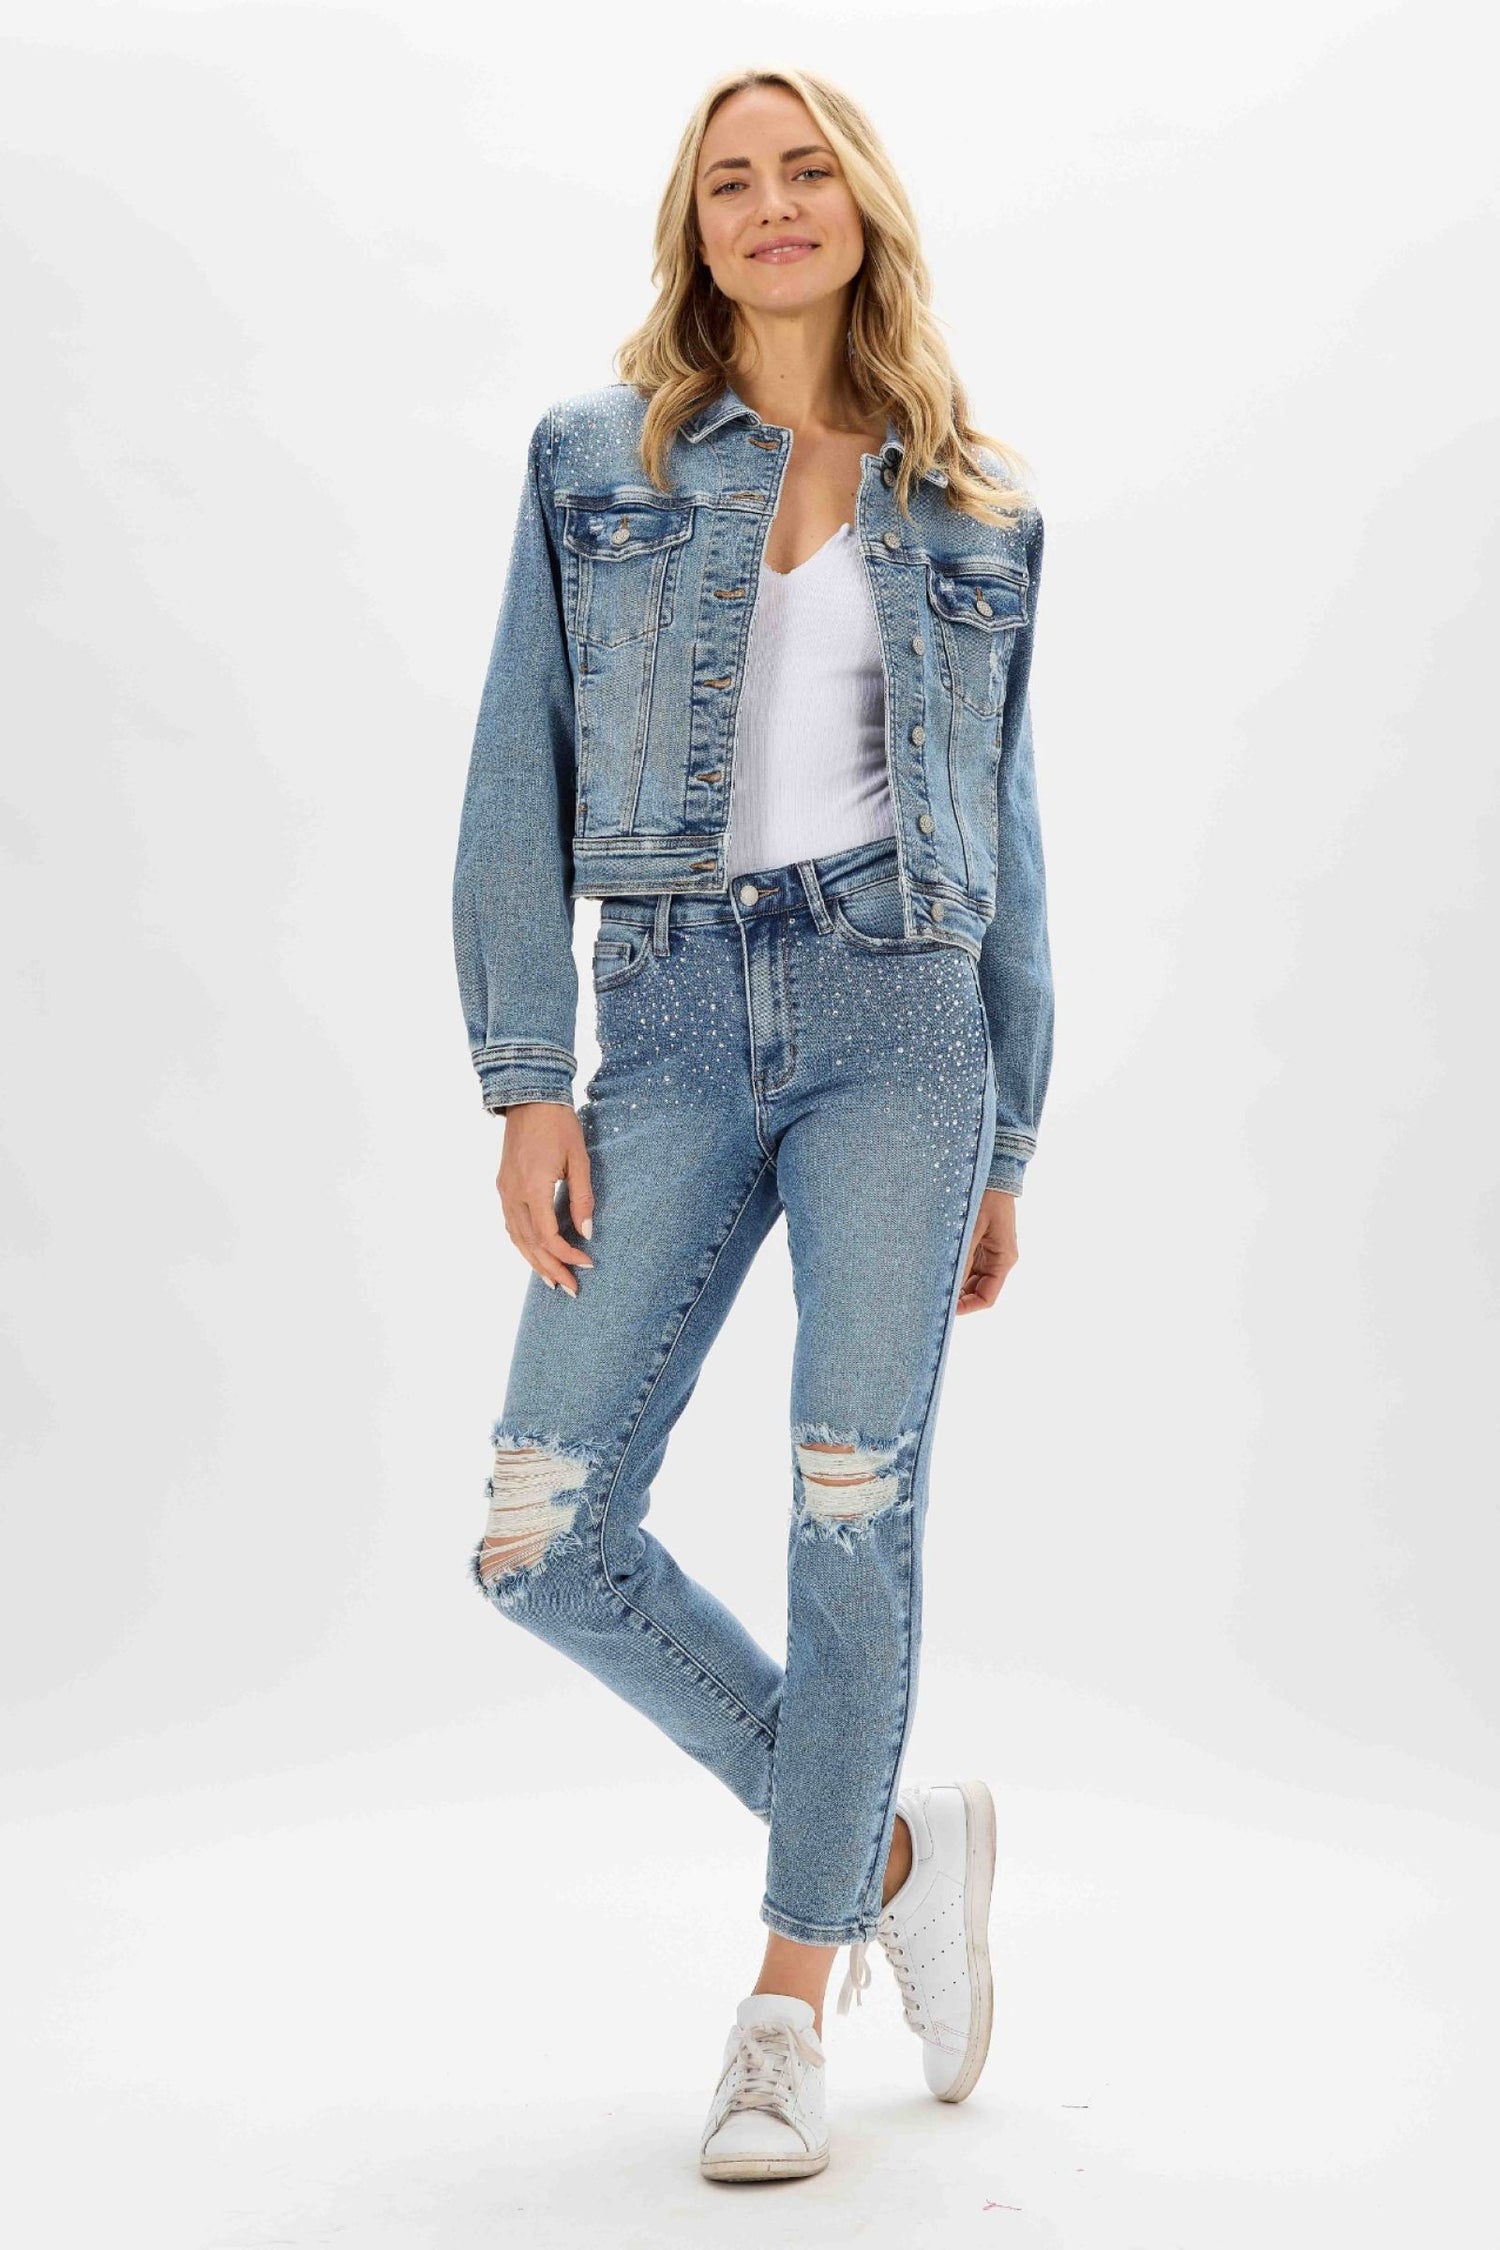 Brandi’s Boutique Online Judy Blue High Waist Rhinestone Embellished Destroyed Slim Fit Jeans 15